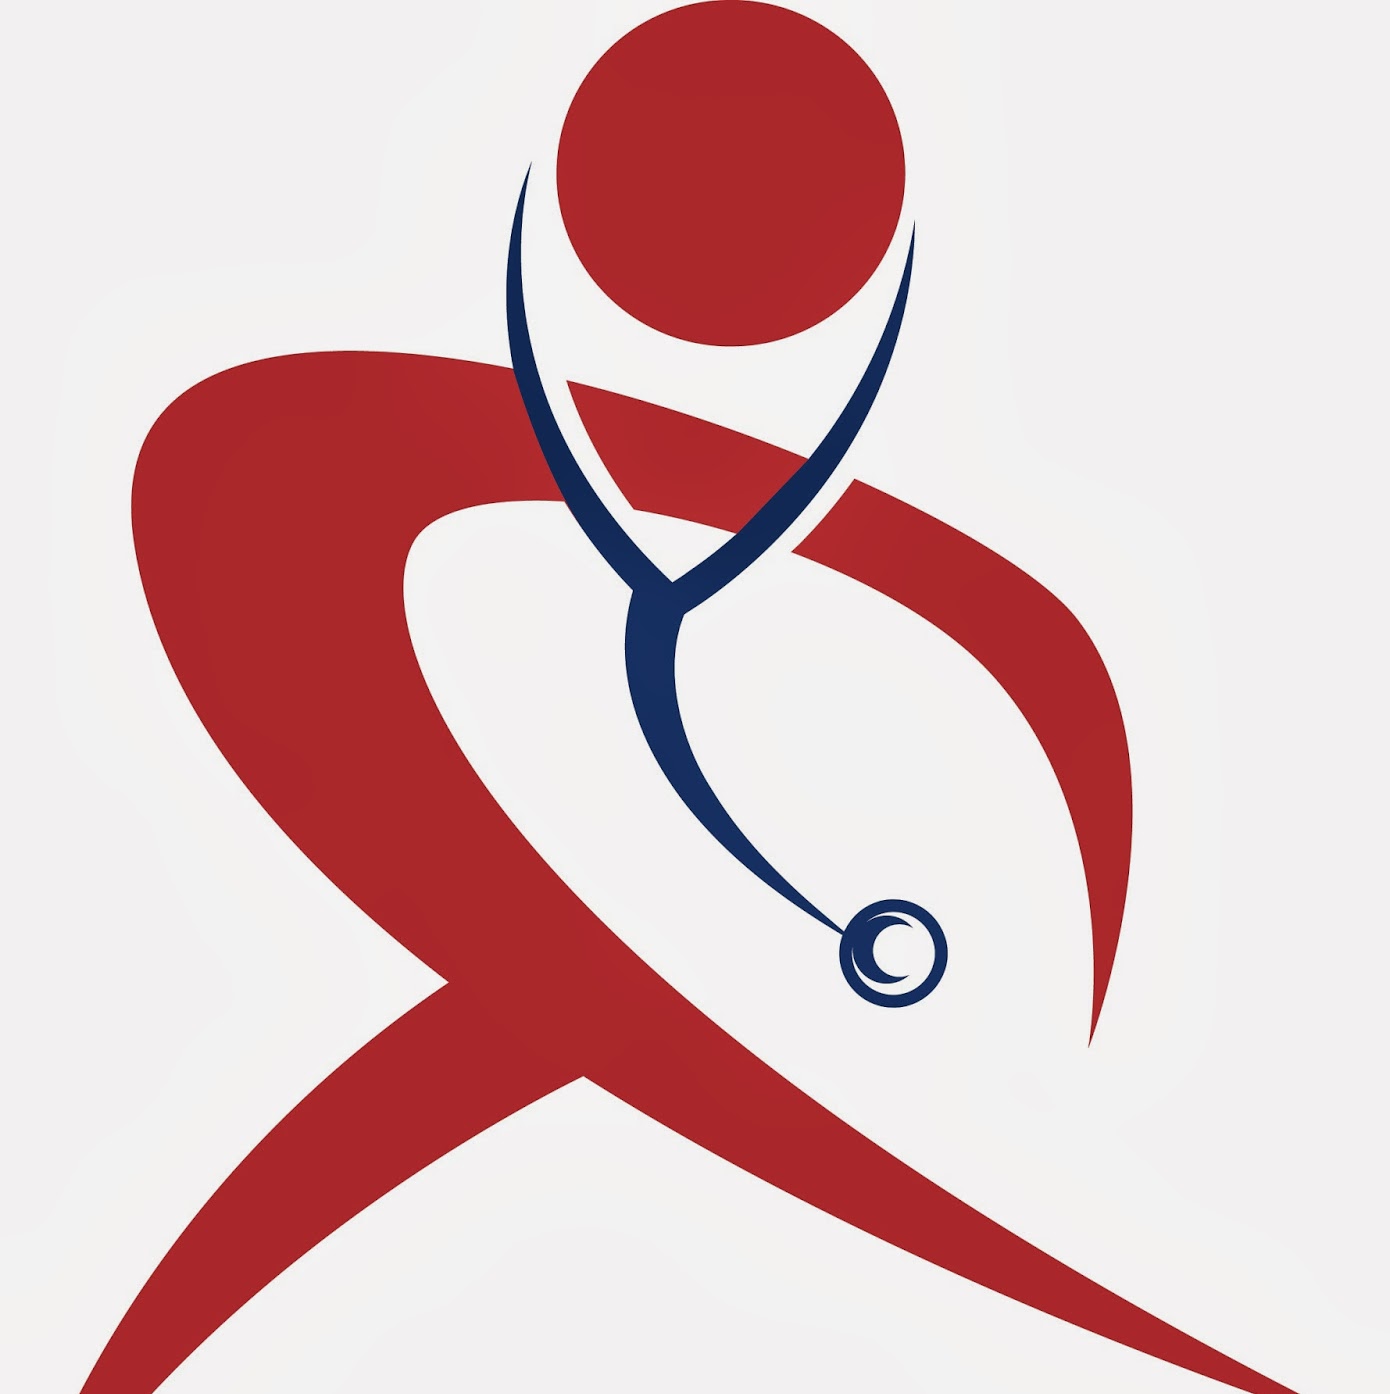 Free Medical Logos Pictures, Download Free Medical Logos Pictures png ...